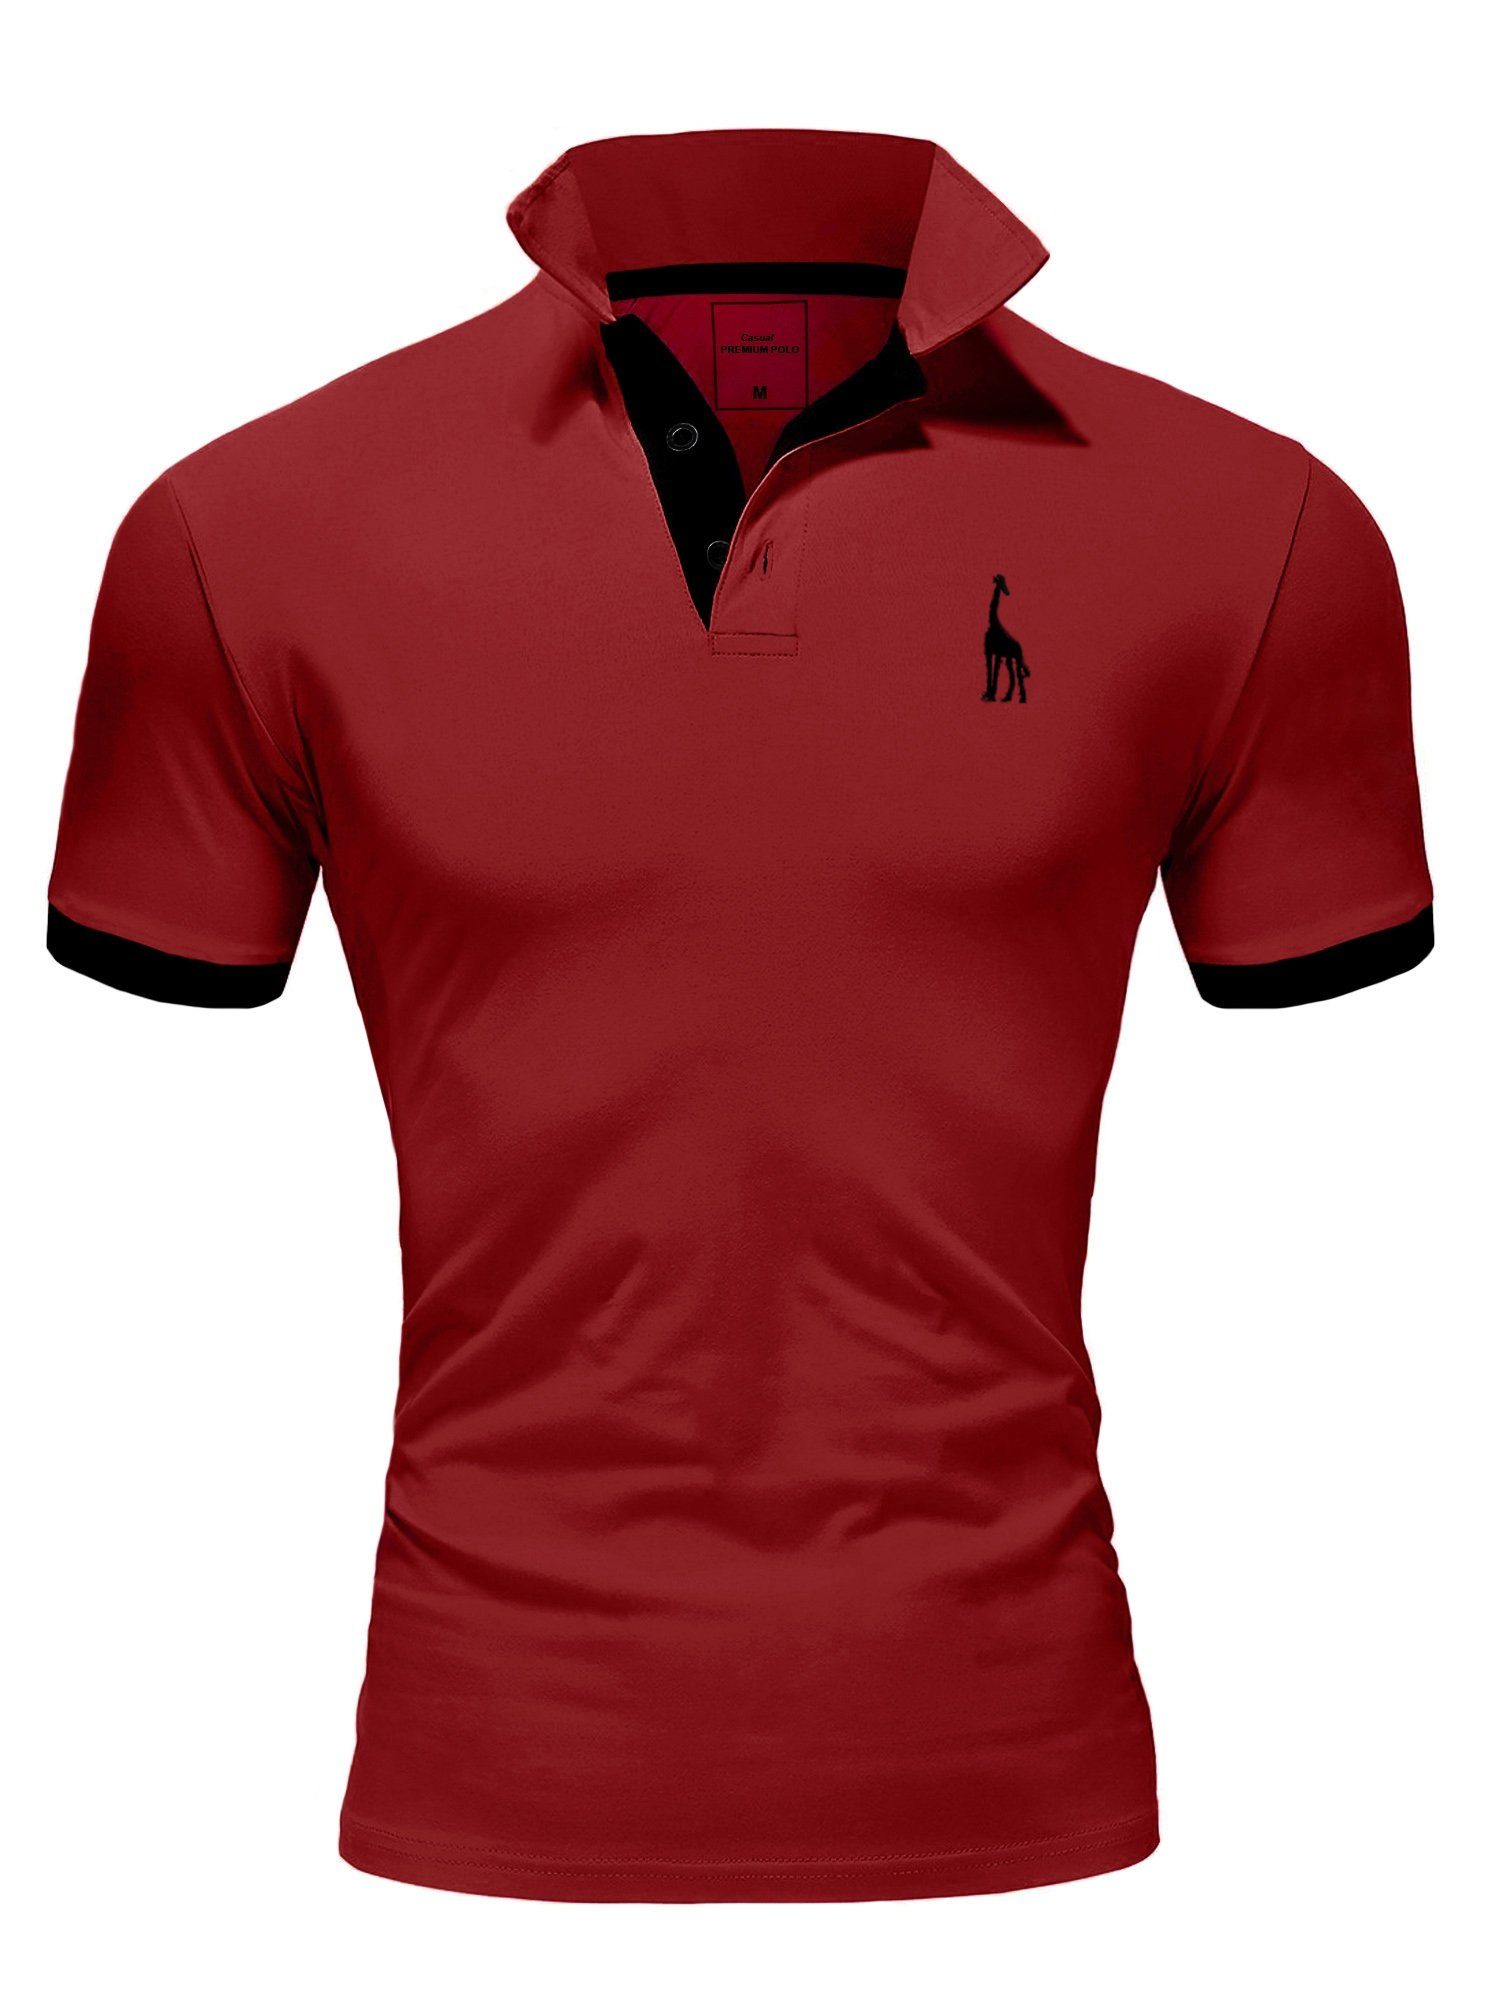 REPUBLIX Poloshirt JOSEPH Kontrast Bordeaux/Schwarz Kurzarm Hemd Basic Polo Herren